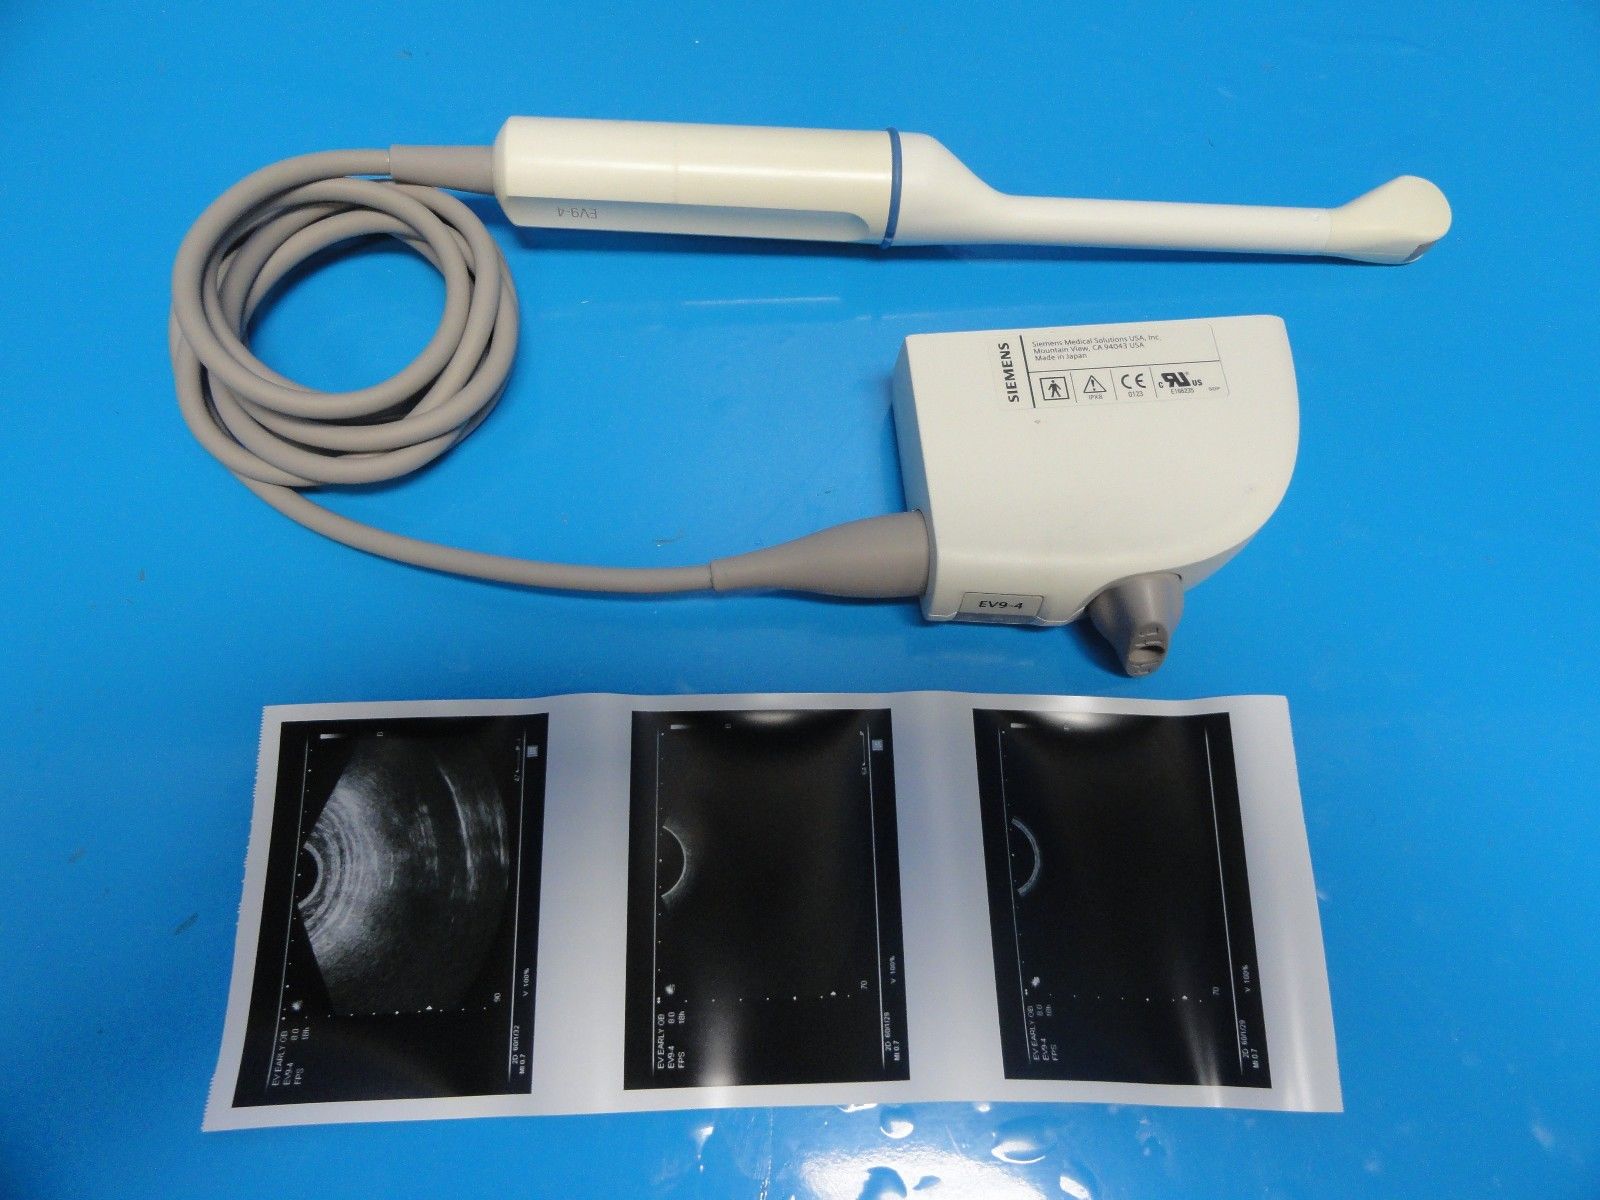 Siemens EV9-4 P/N 08647500 Endocavity Ultrasound Transducer (11877) DIAGNOSTIC ULTRASOUND MACHINES FOR SALE